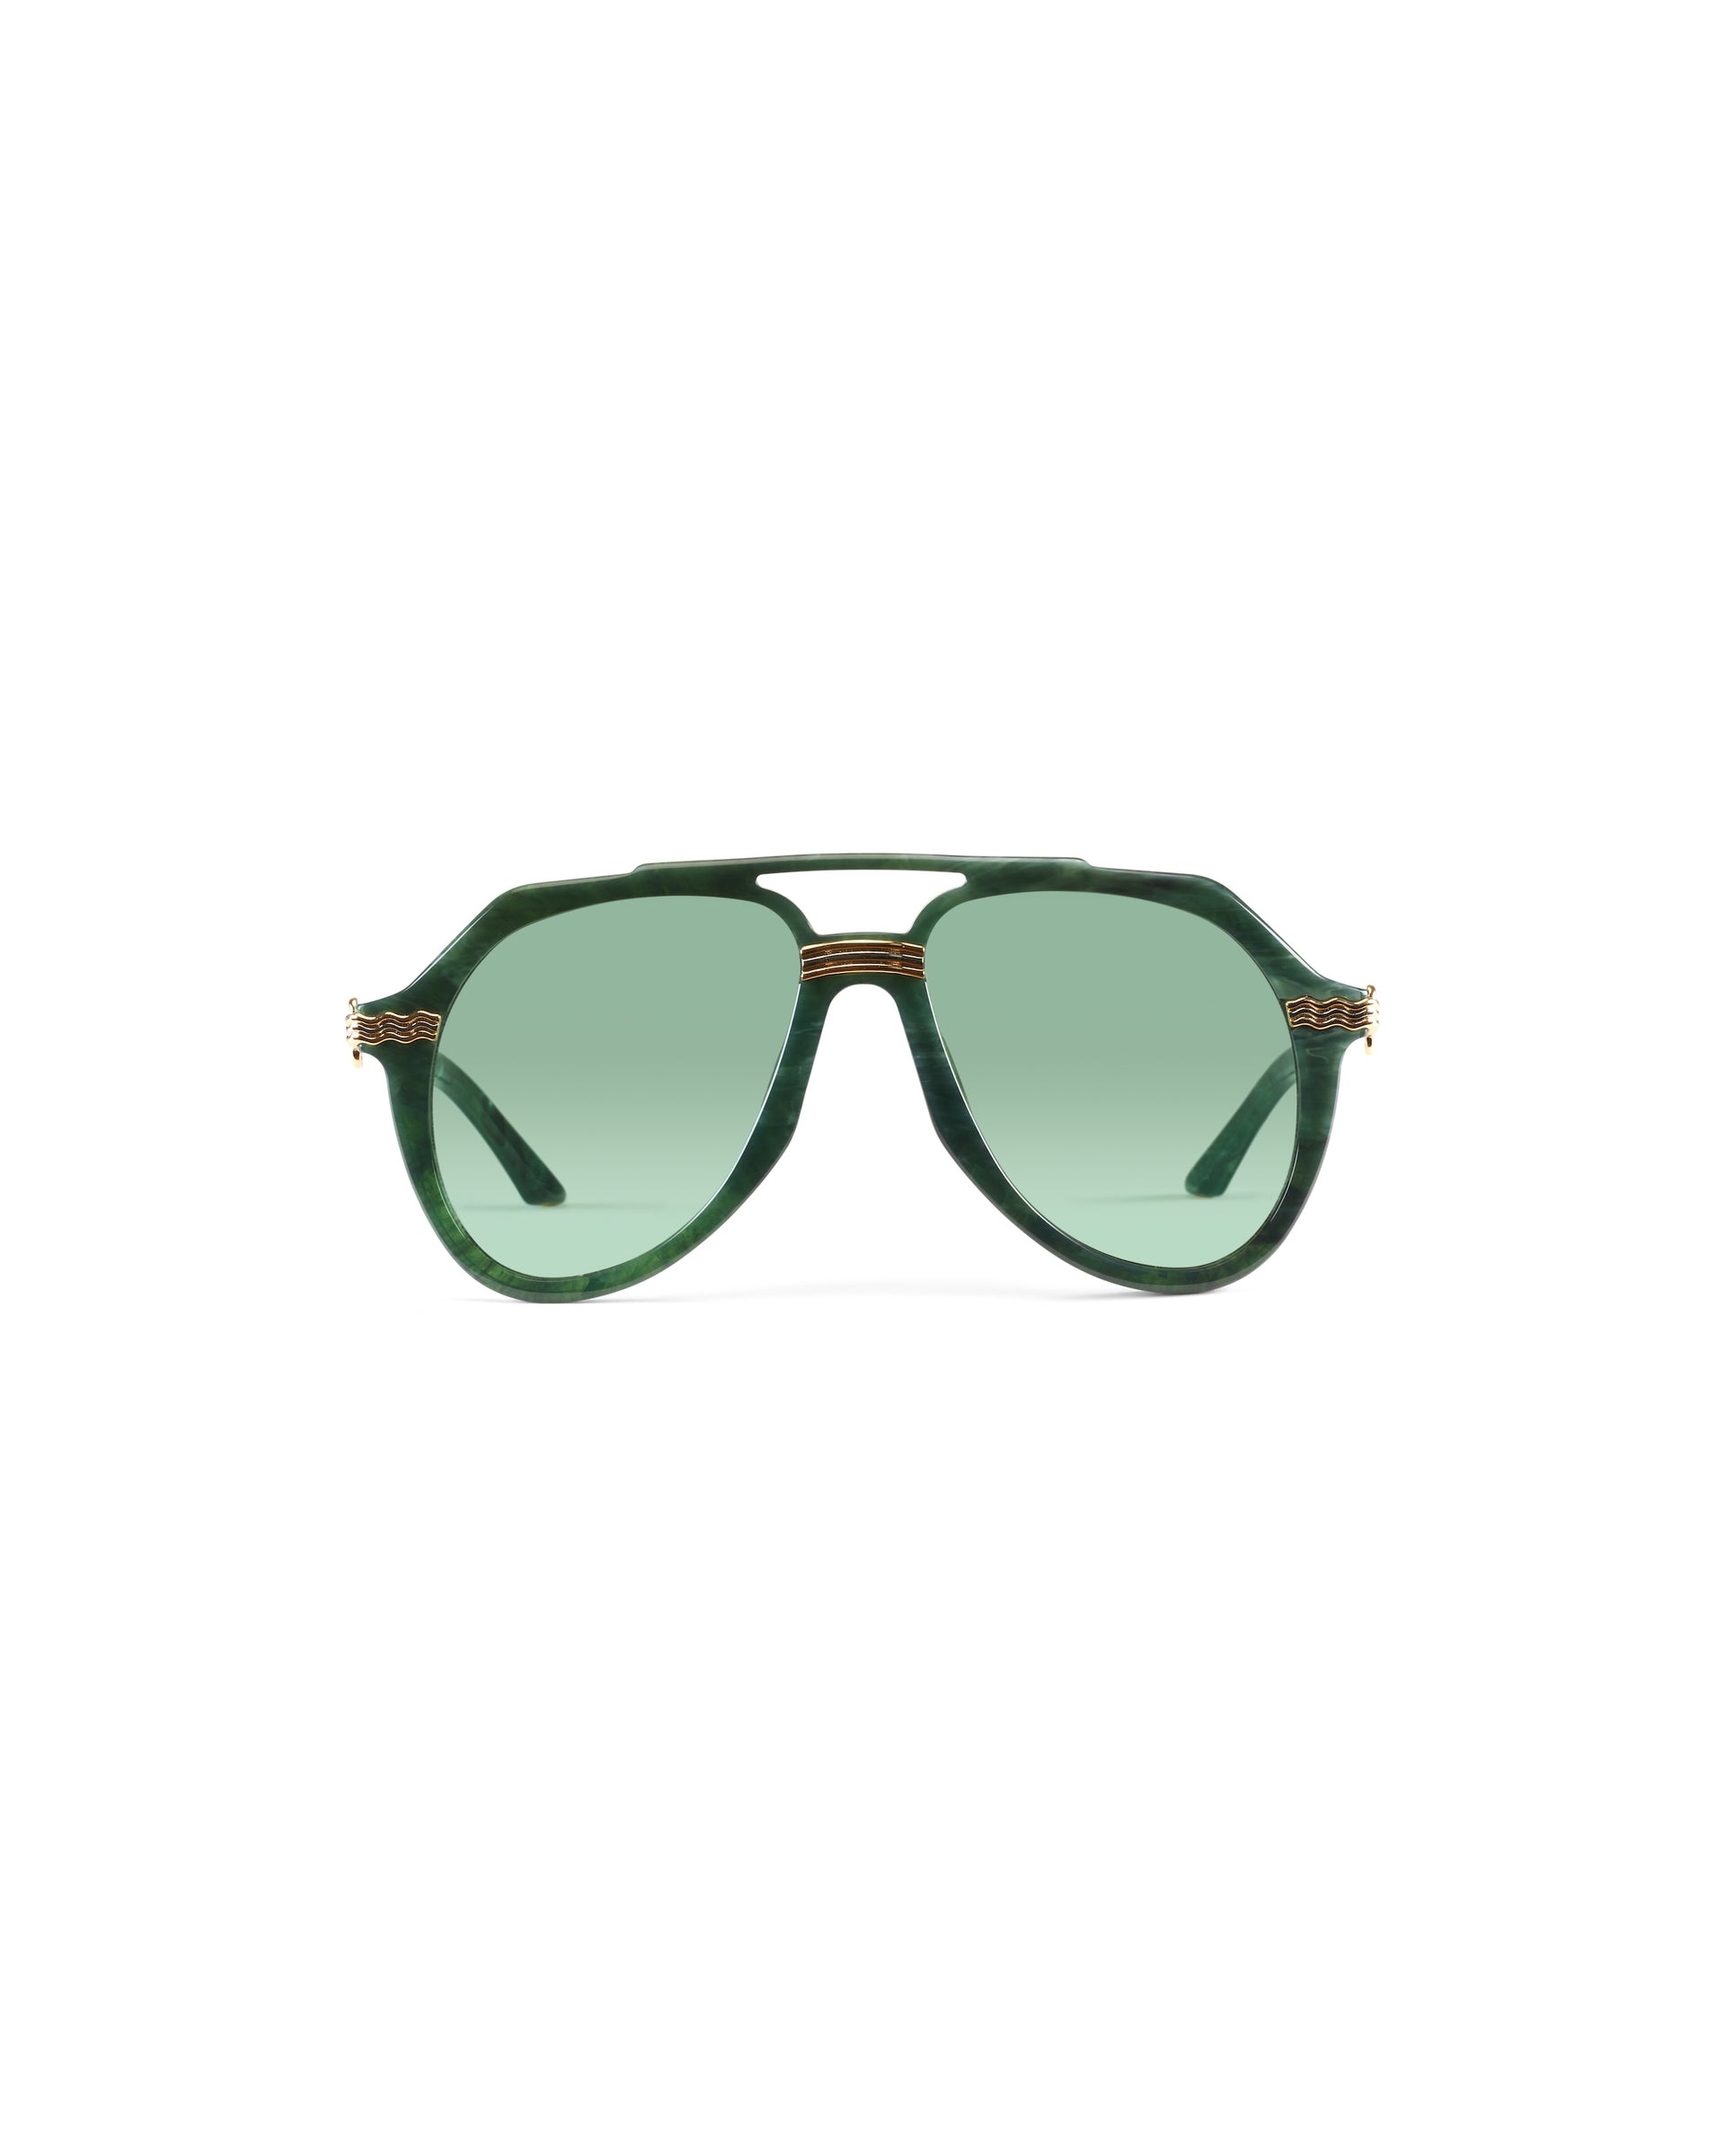 Rajio Green & Gold Sunglasses - 5